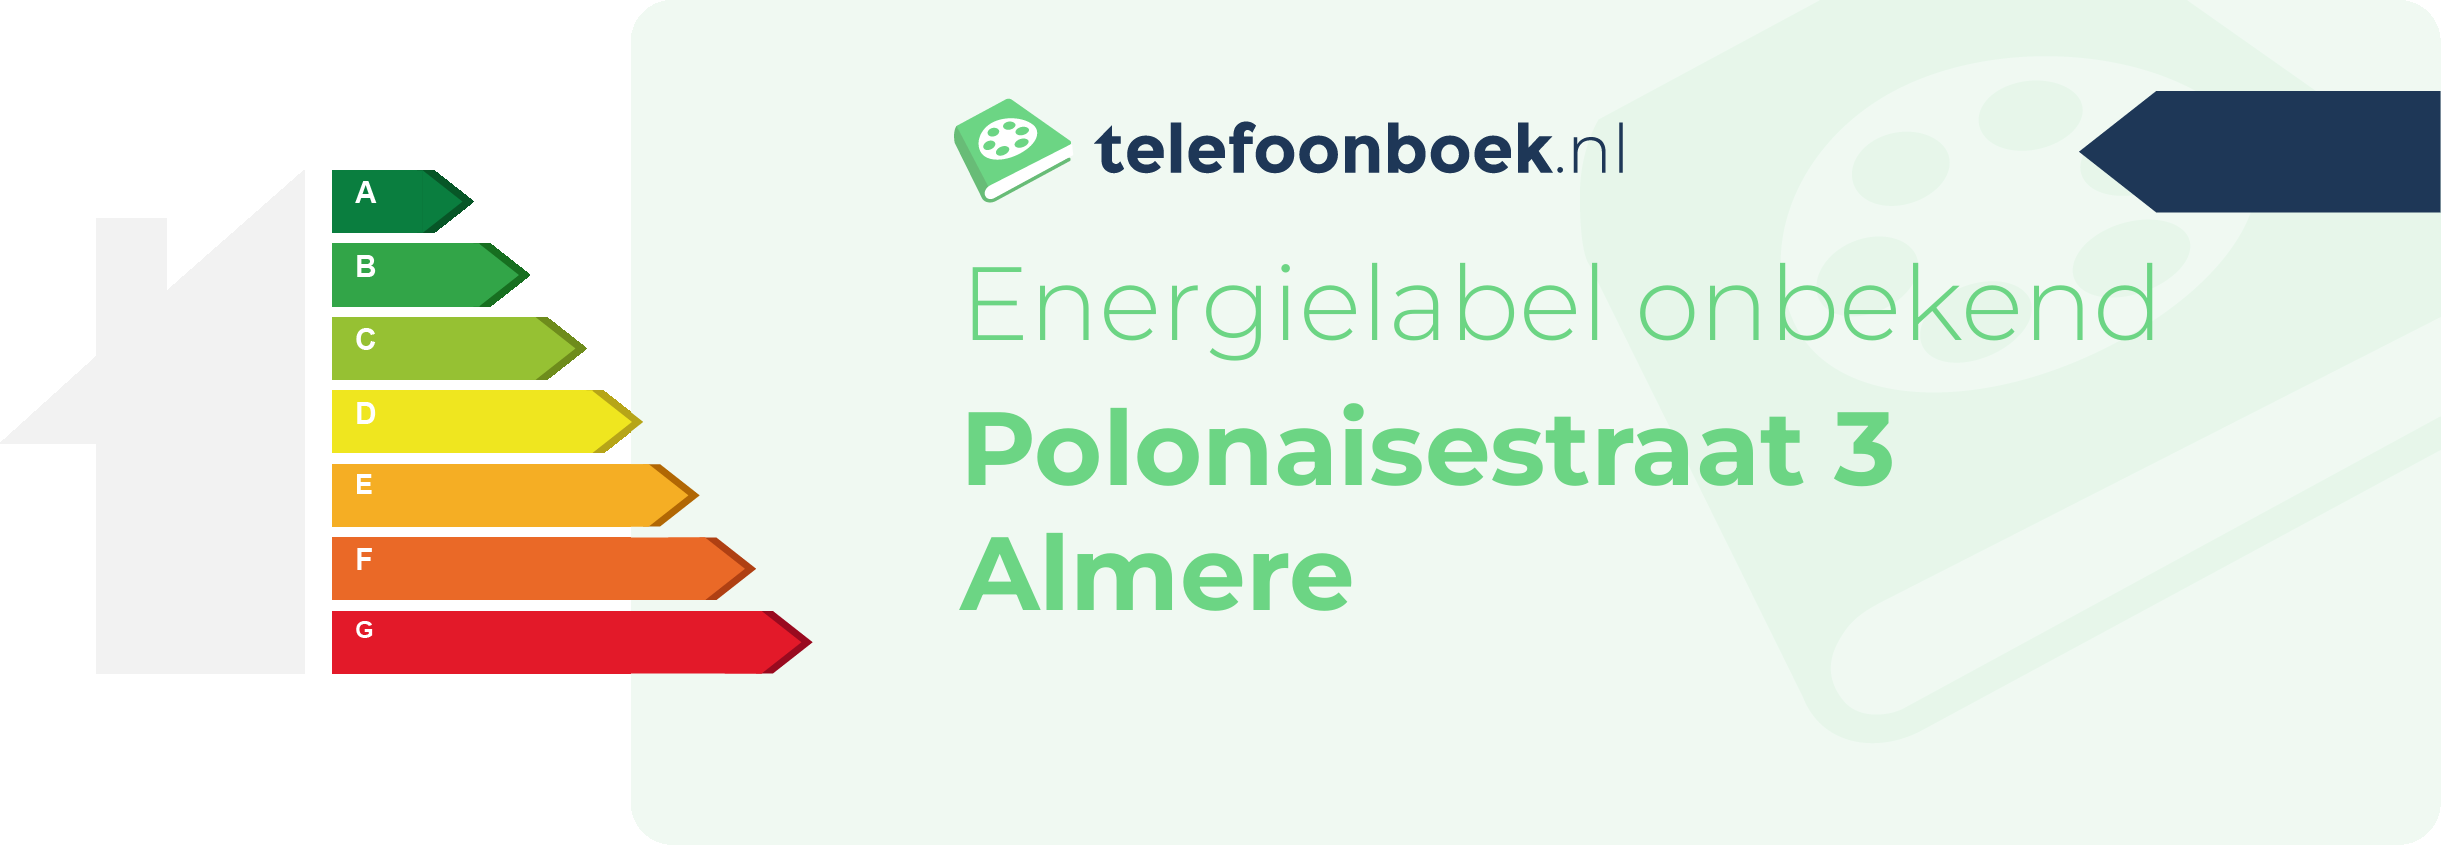 Energielabel Polonaisestraat 3 Almere